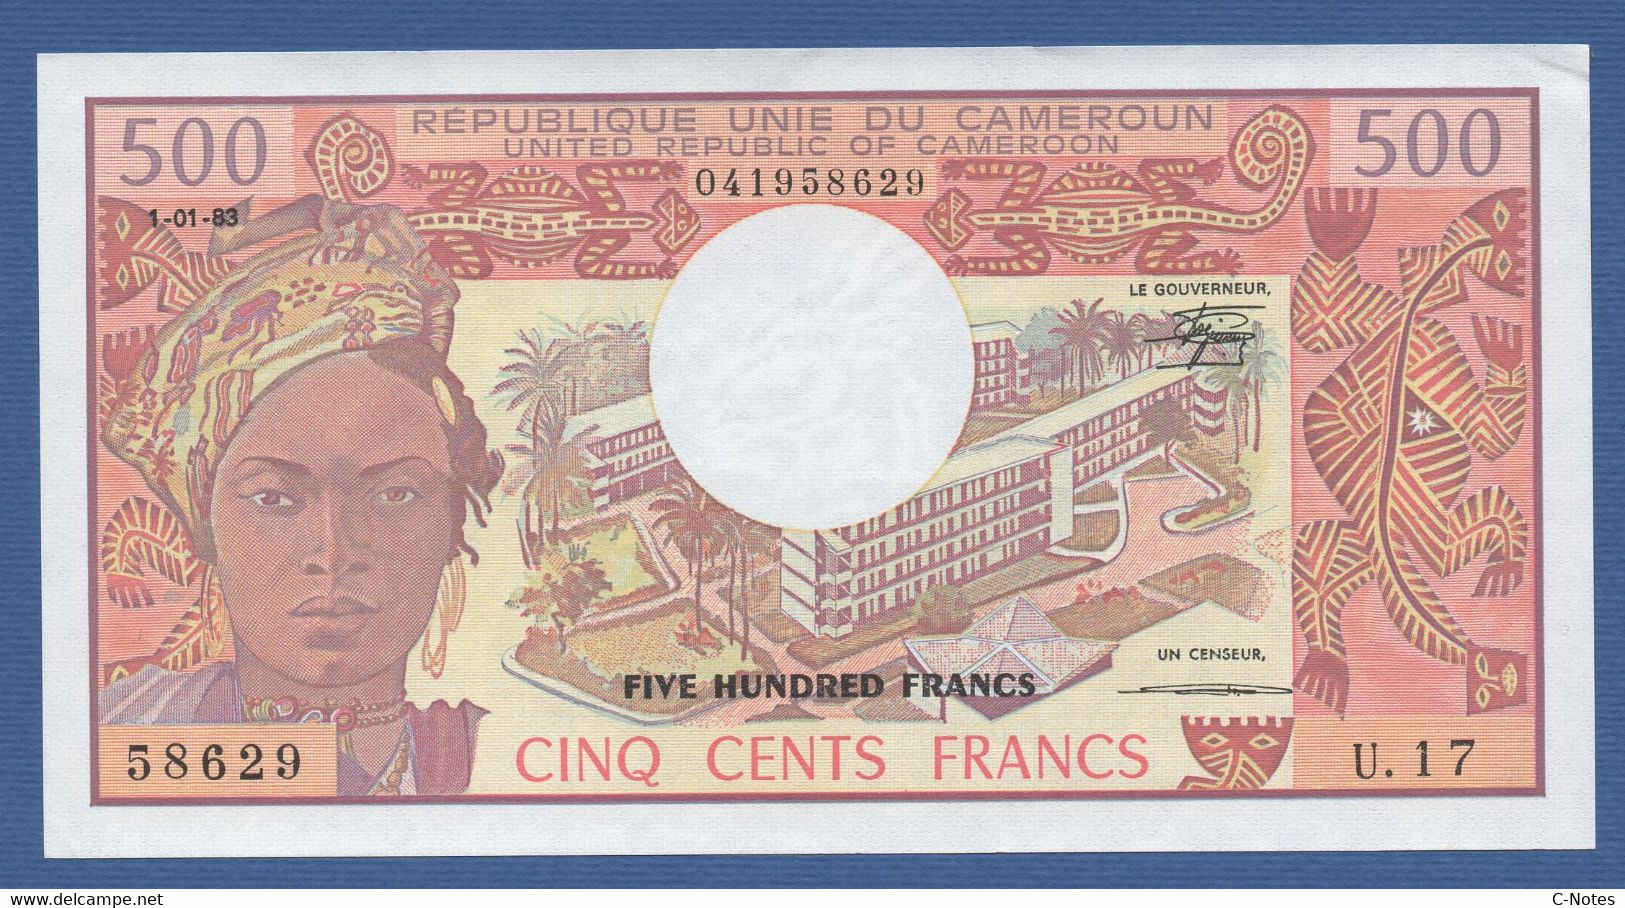 CAMEROON - P.15d – 500 Francs 01.01.1983 AUNC Serie U.17 58629 - Kamerun